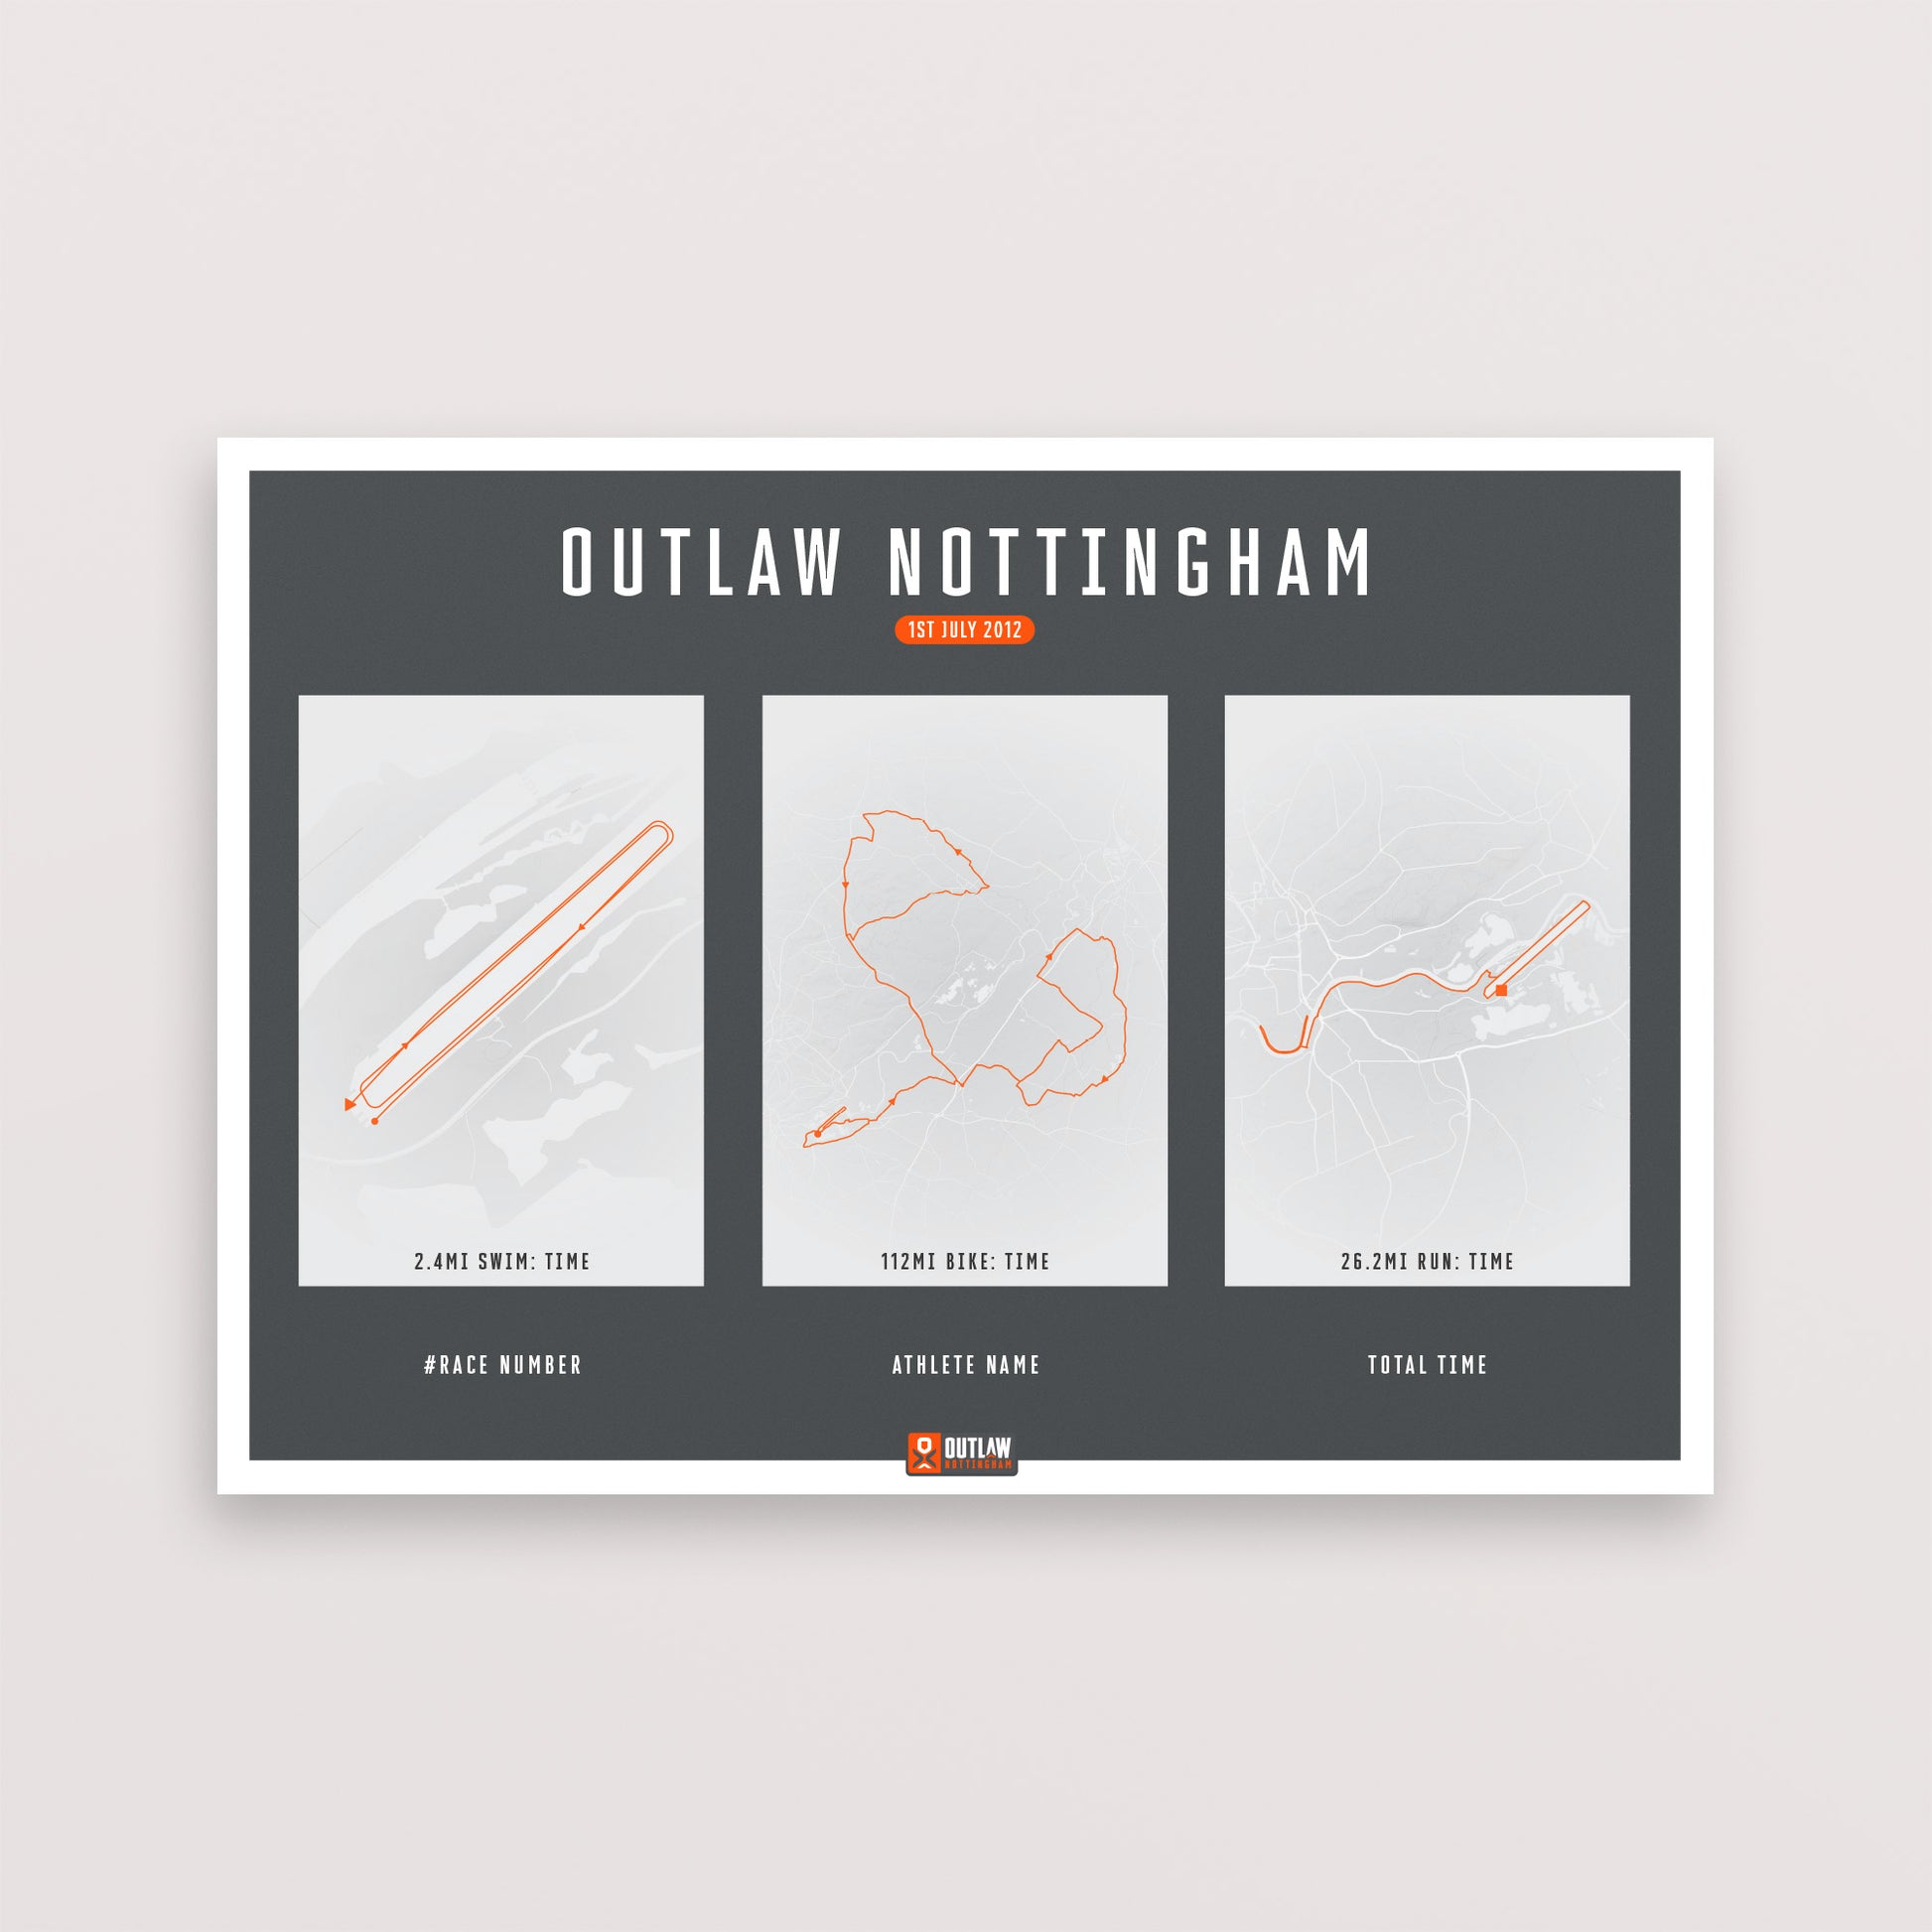 Outlaw Nottingham Triathlon – Poster – The English Cyclist